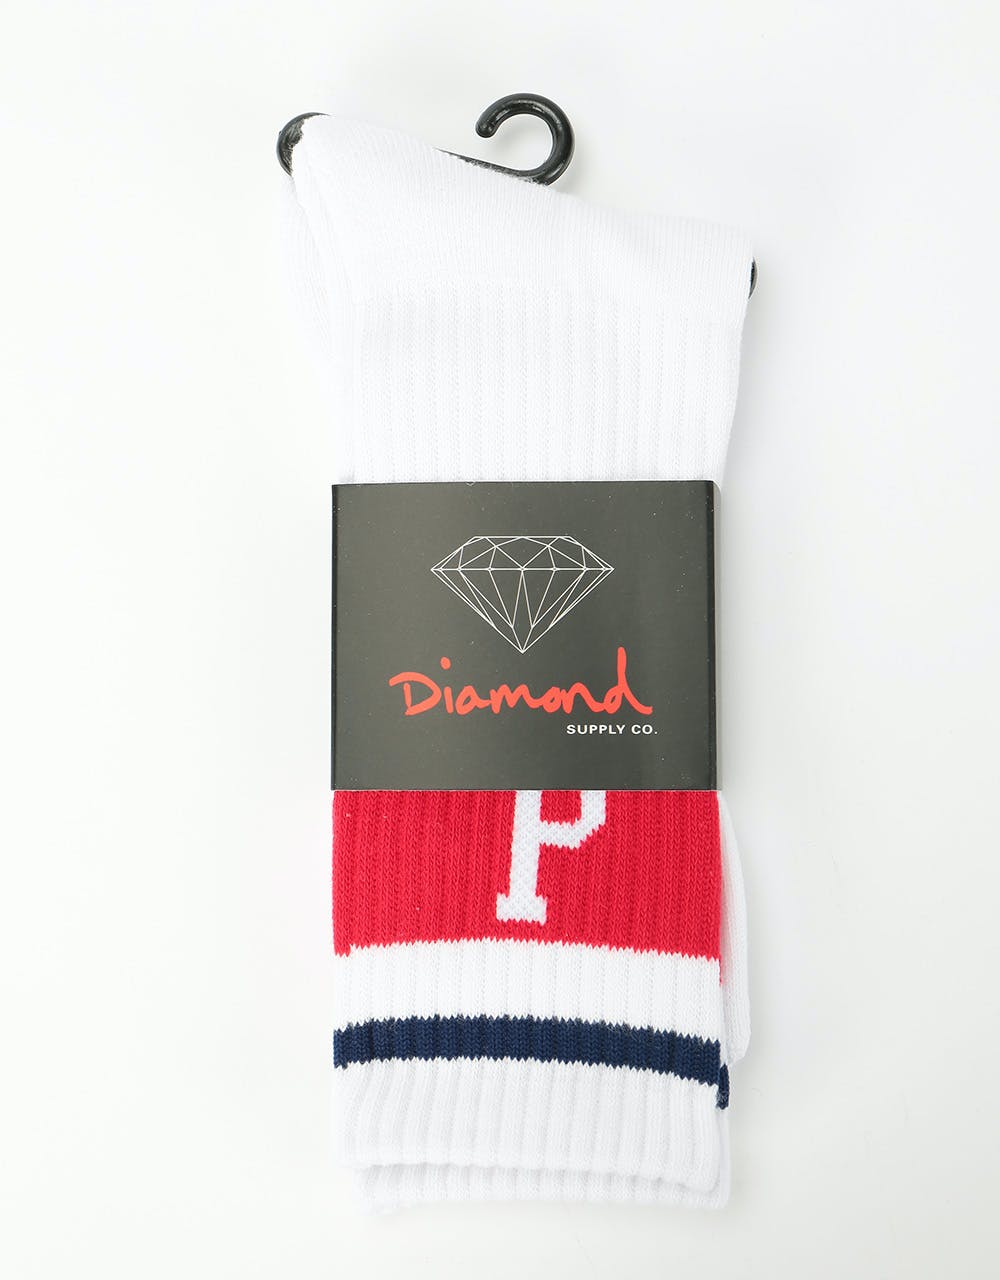 Diamond Supply Co. Un Polo Hgh Top Socks - White/Red